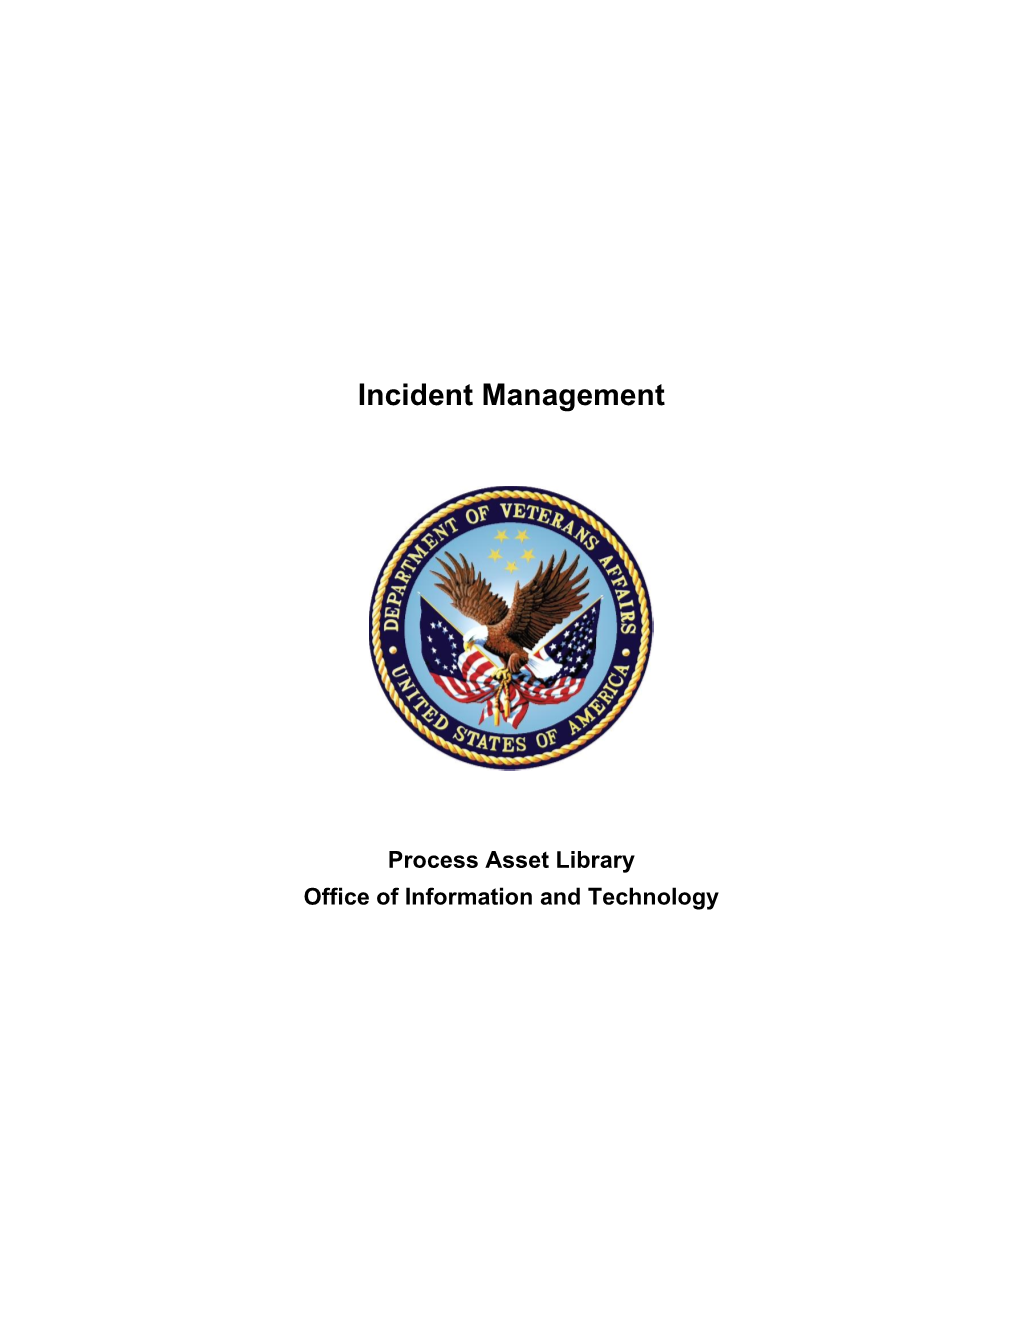 Incident Management Process Map